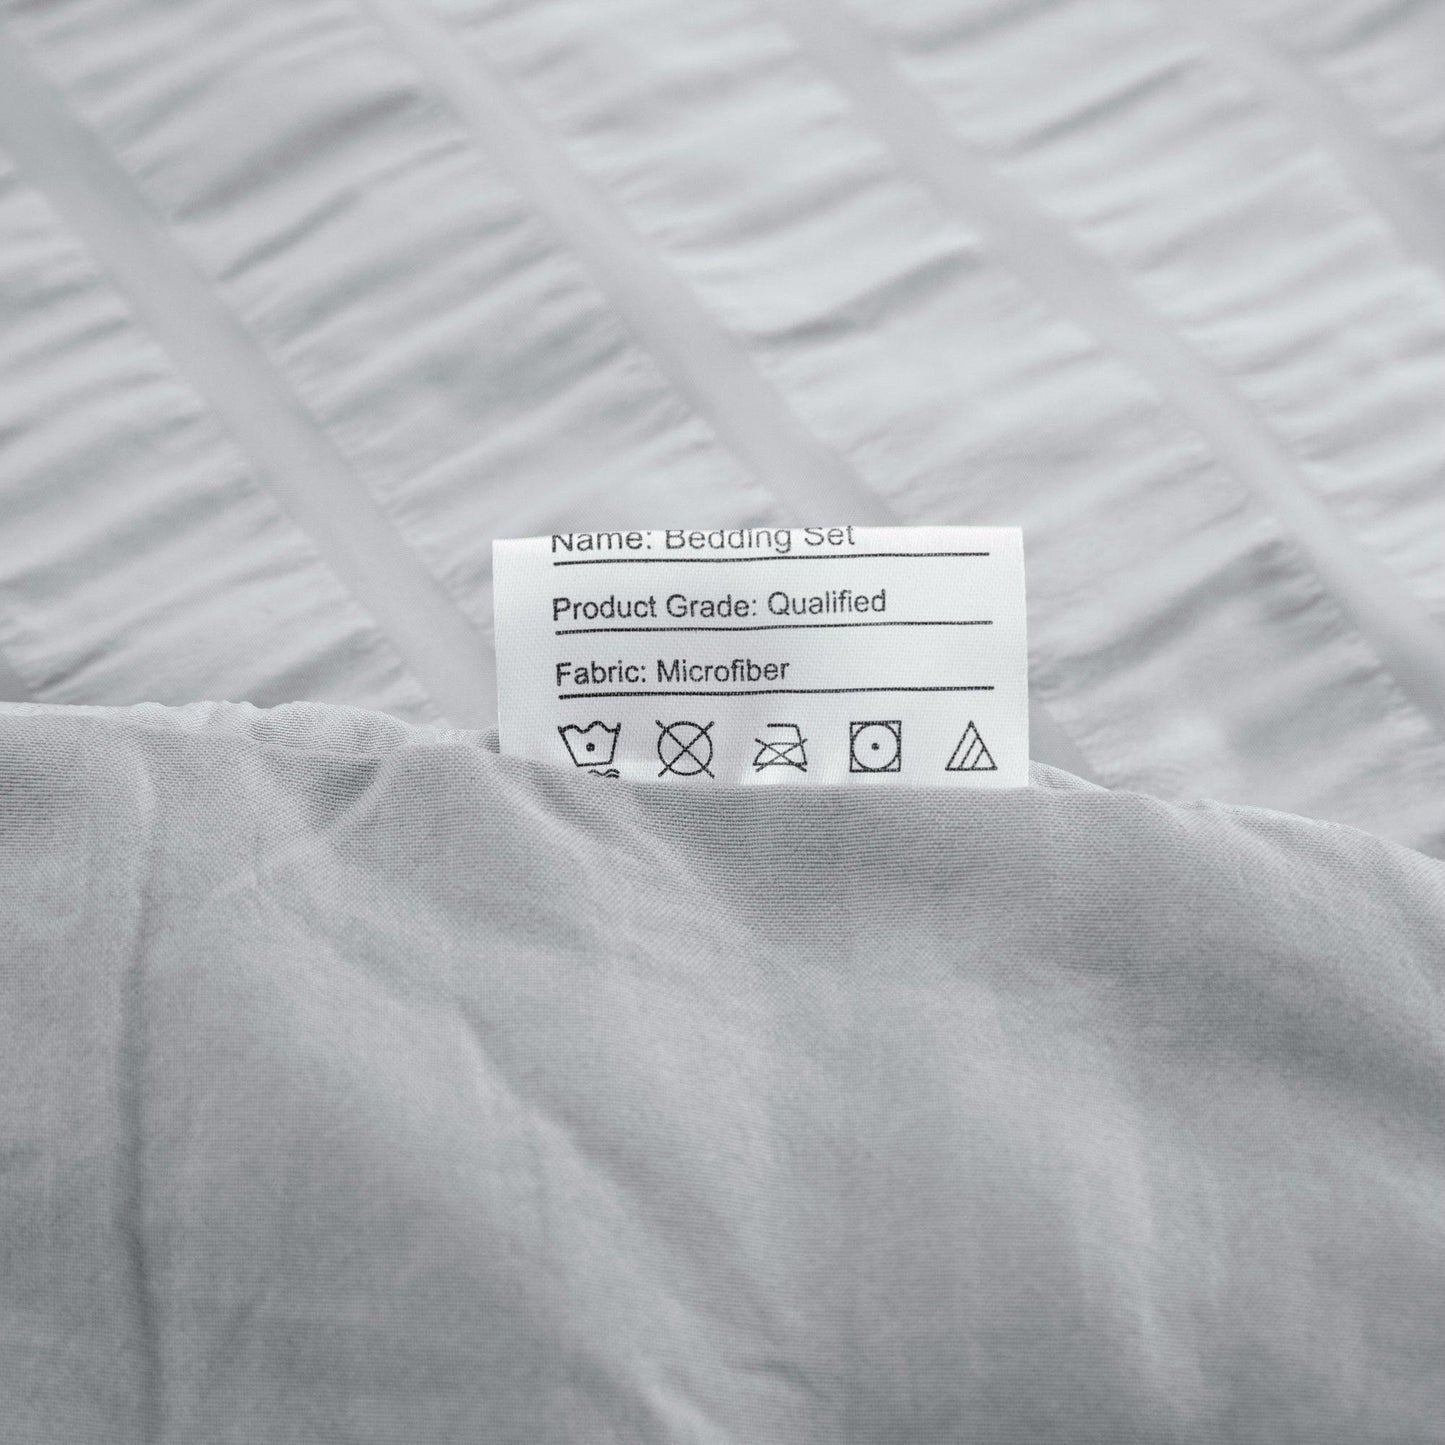 Grey Seersucker Comforter Set 3 Pieces Striped Textured Bedding for All Season - Wongs bedding